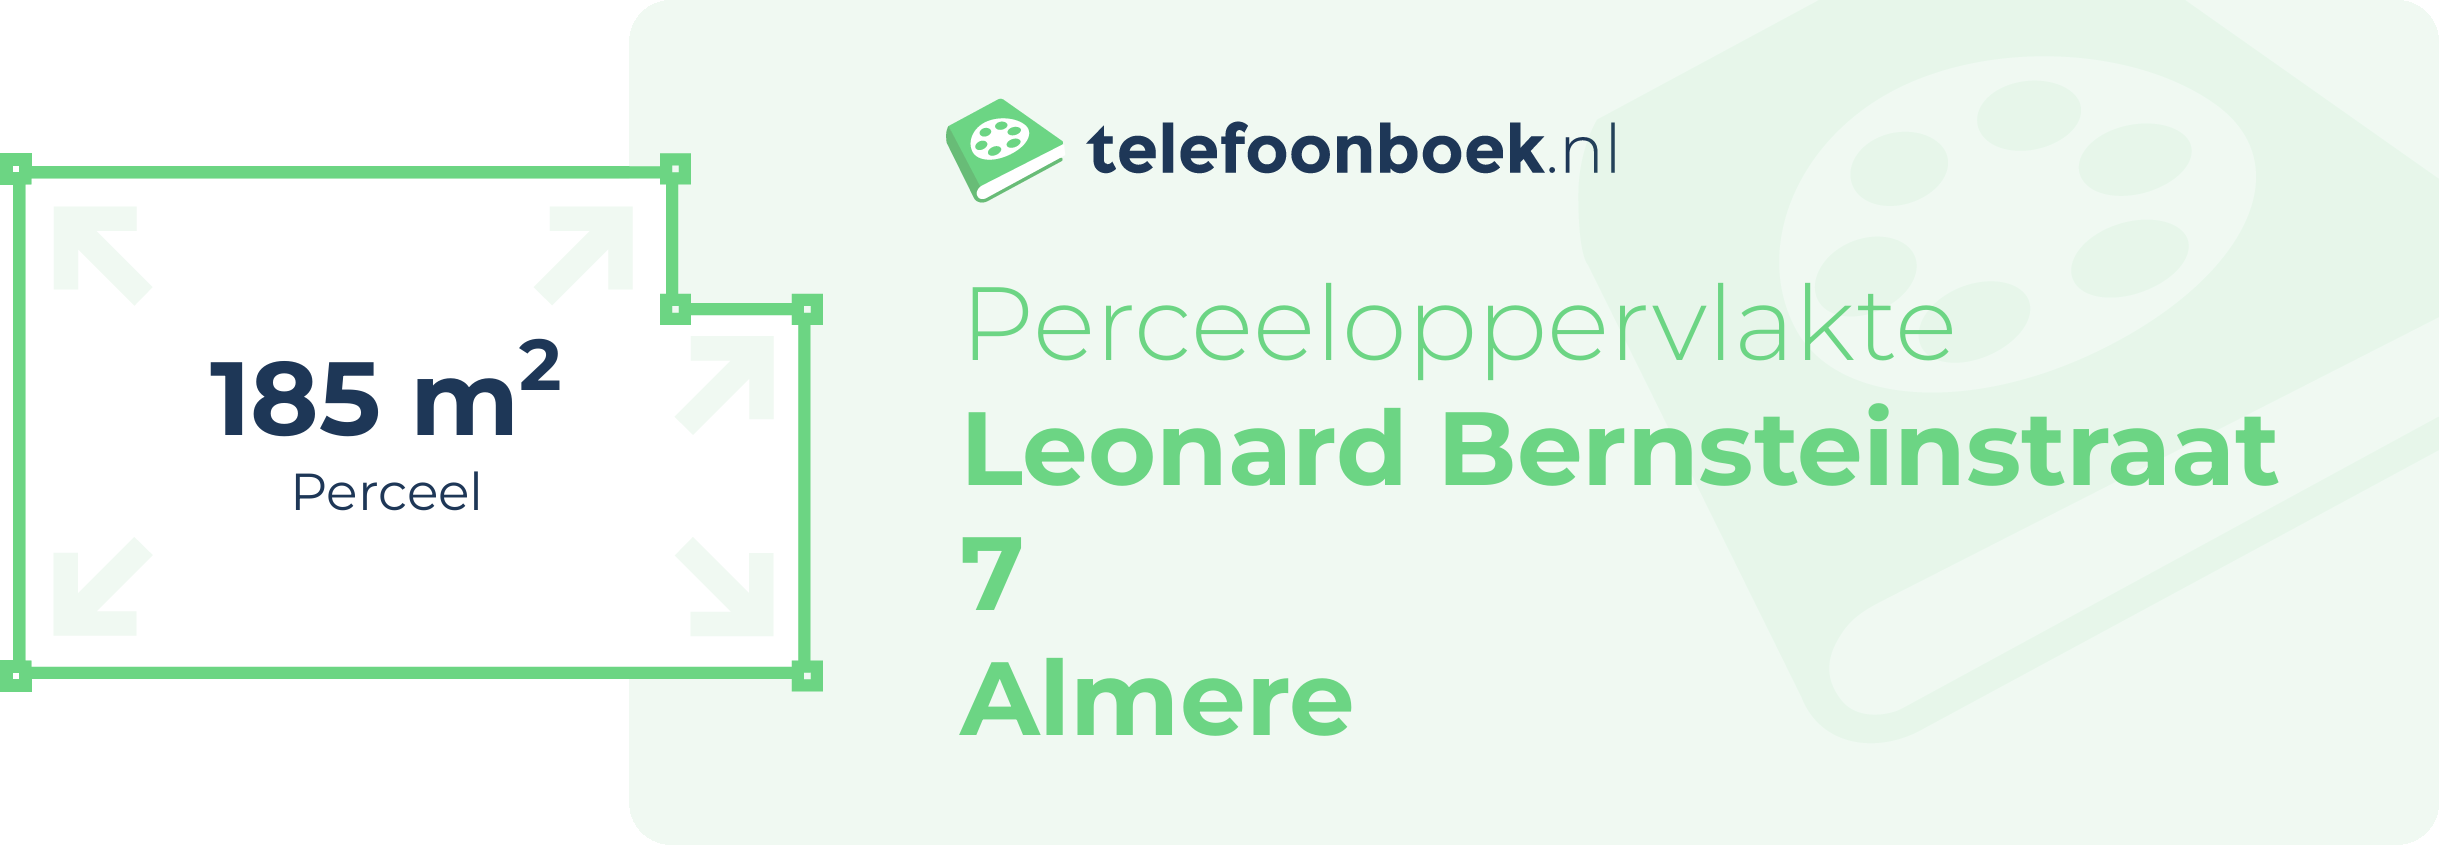 Perceeloppervlakte Leonard Bernsteinstraat 7 Almere